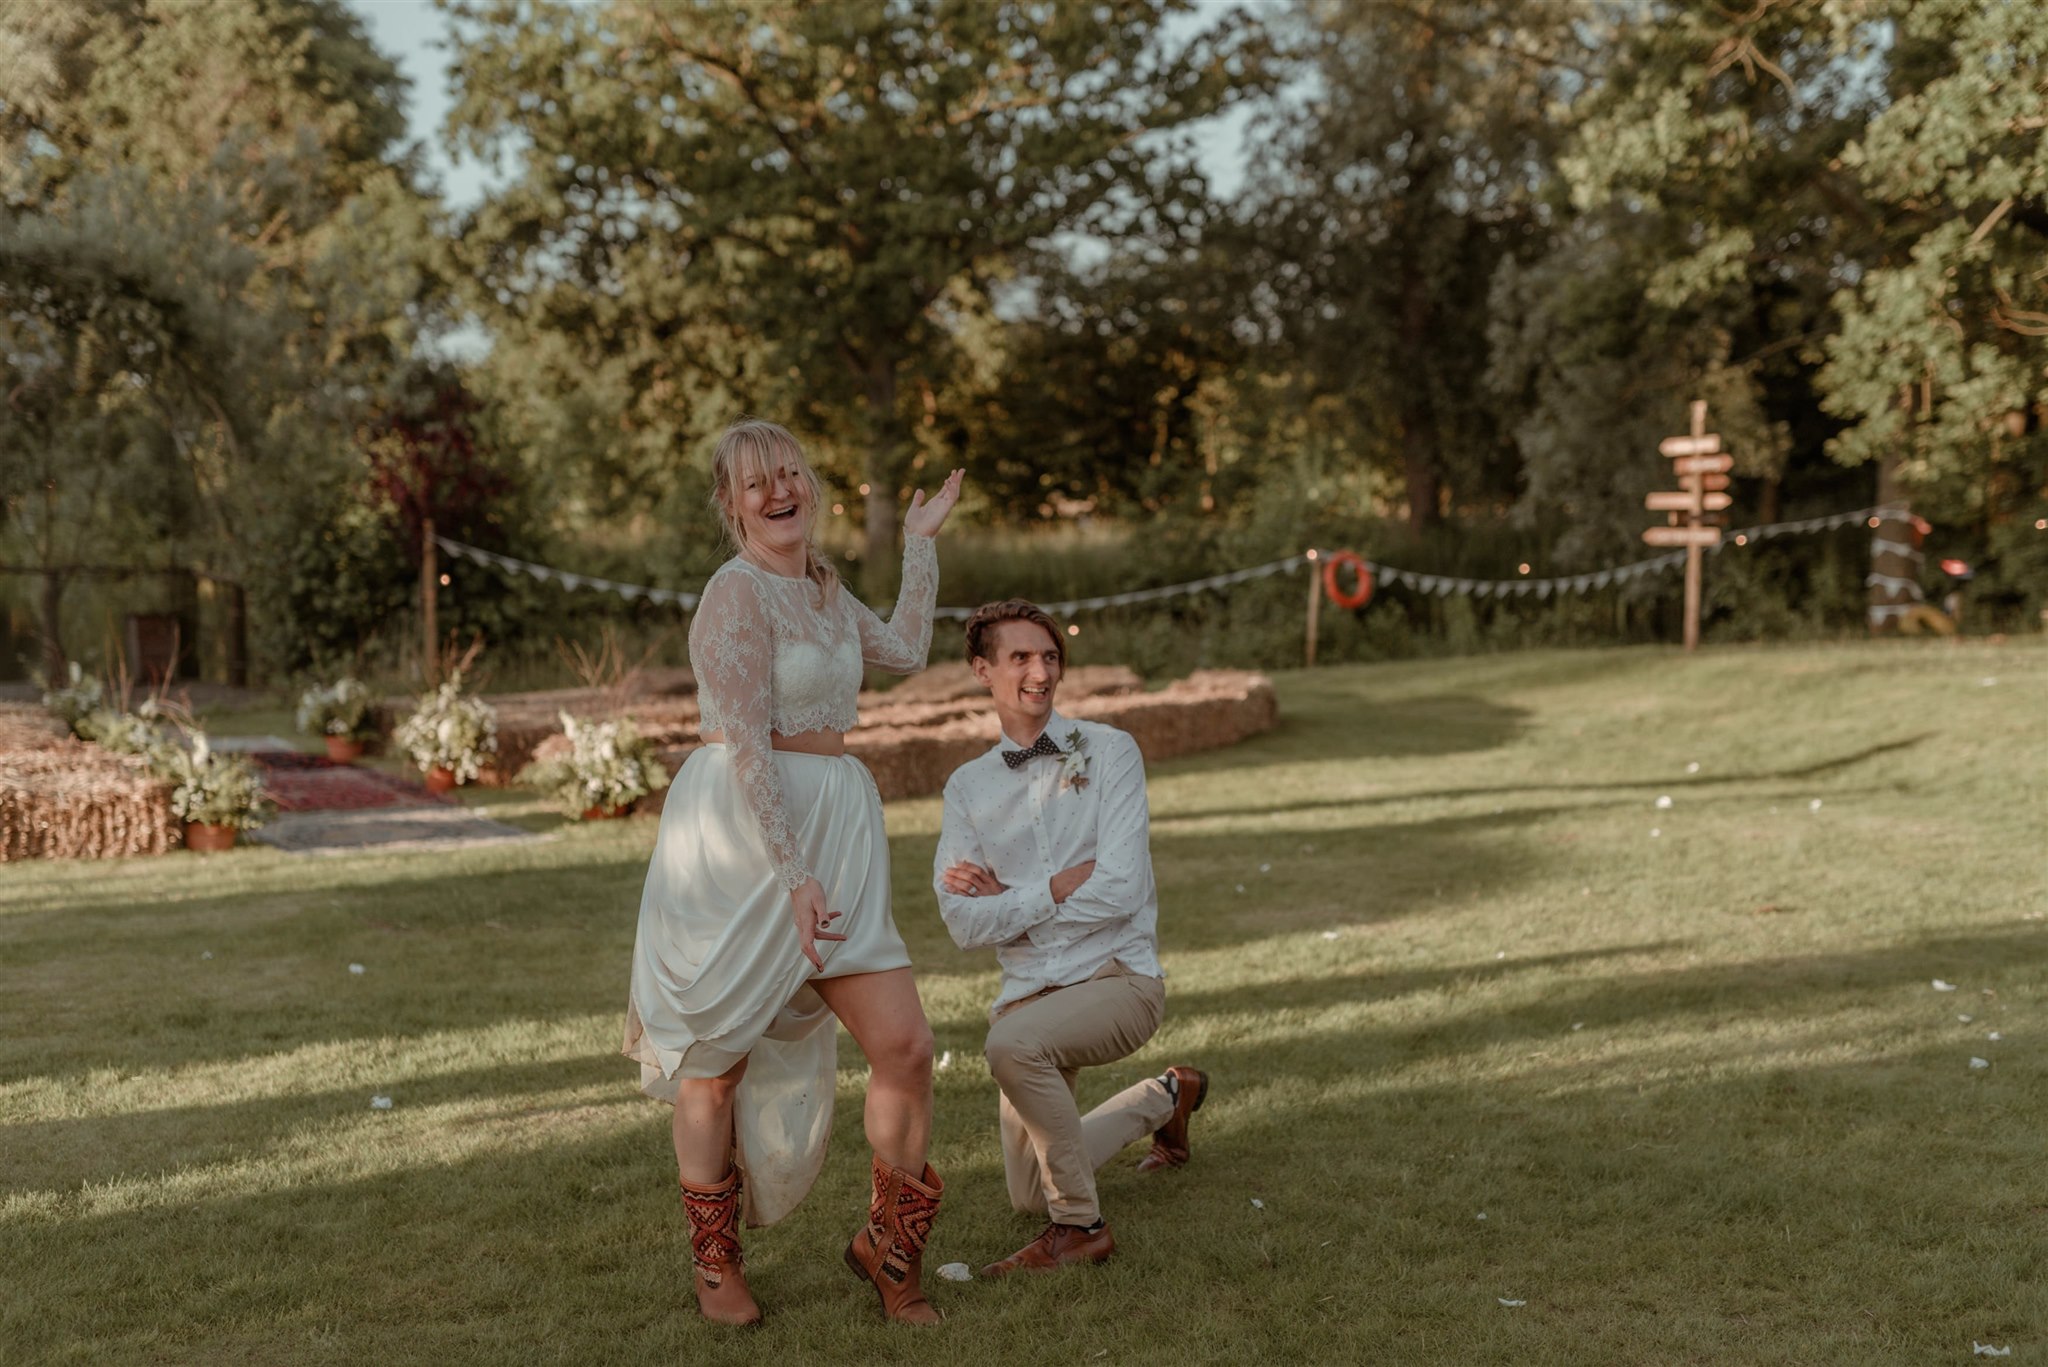 chalkney water meadows wedding photography Essex forest venue uk boho style modern wedding photography